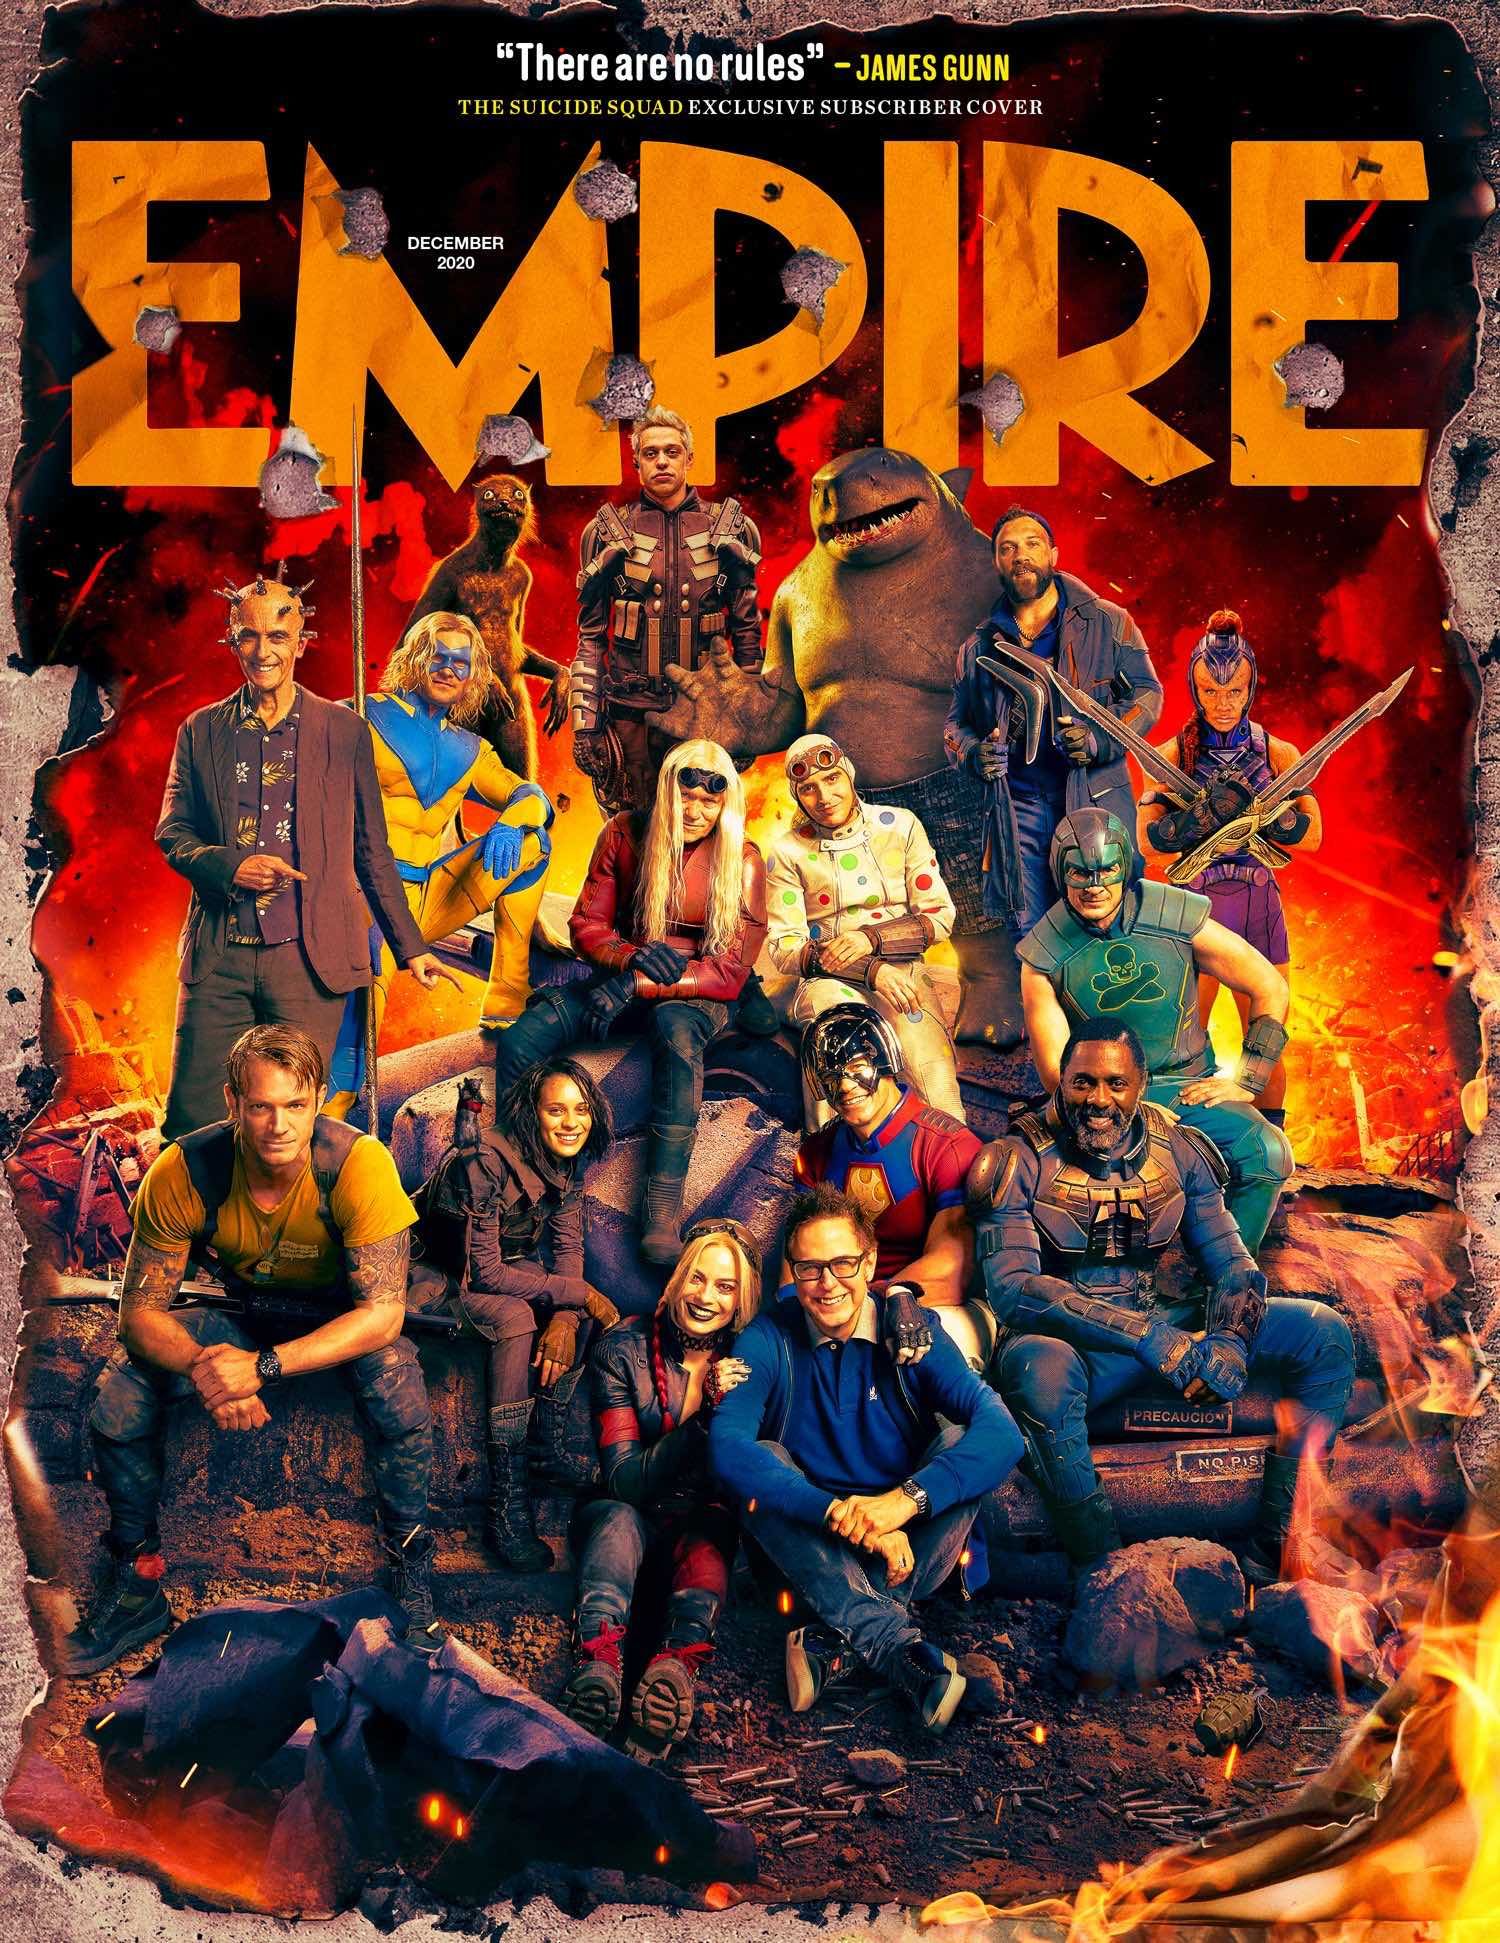 The Suicide Squad Empire Magazine Subscriber Cover